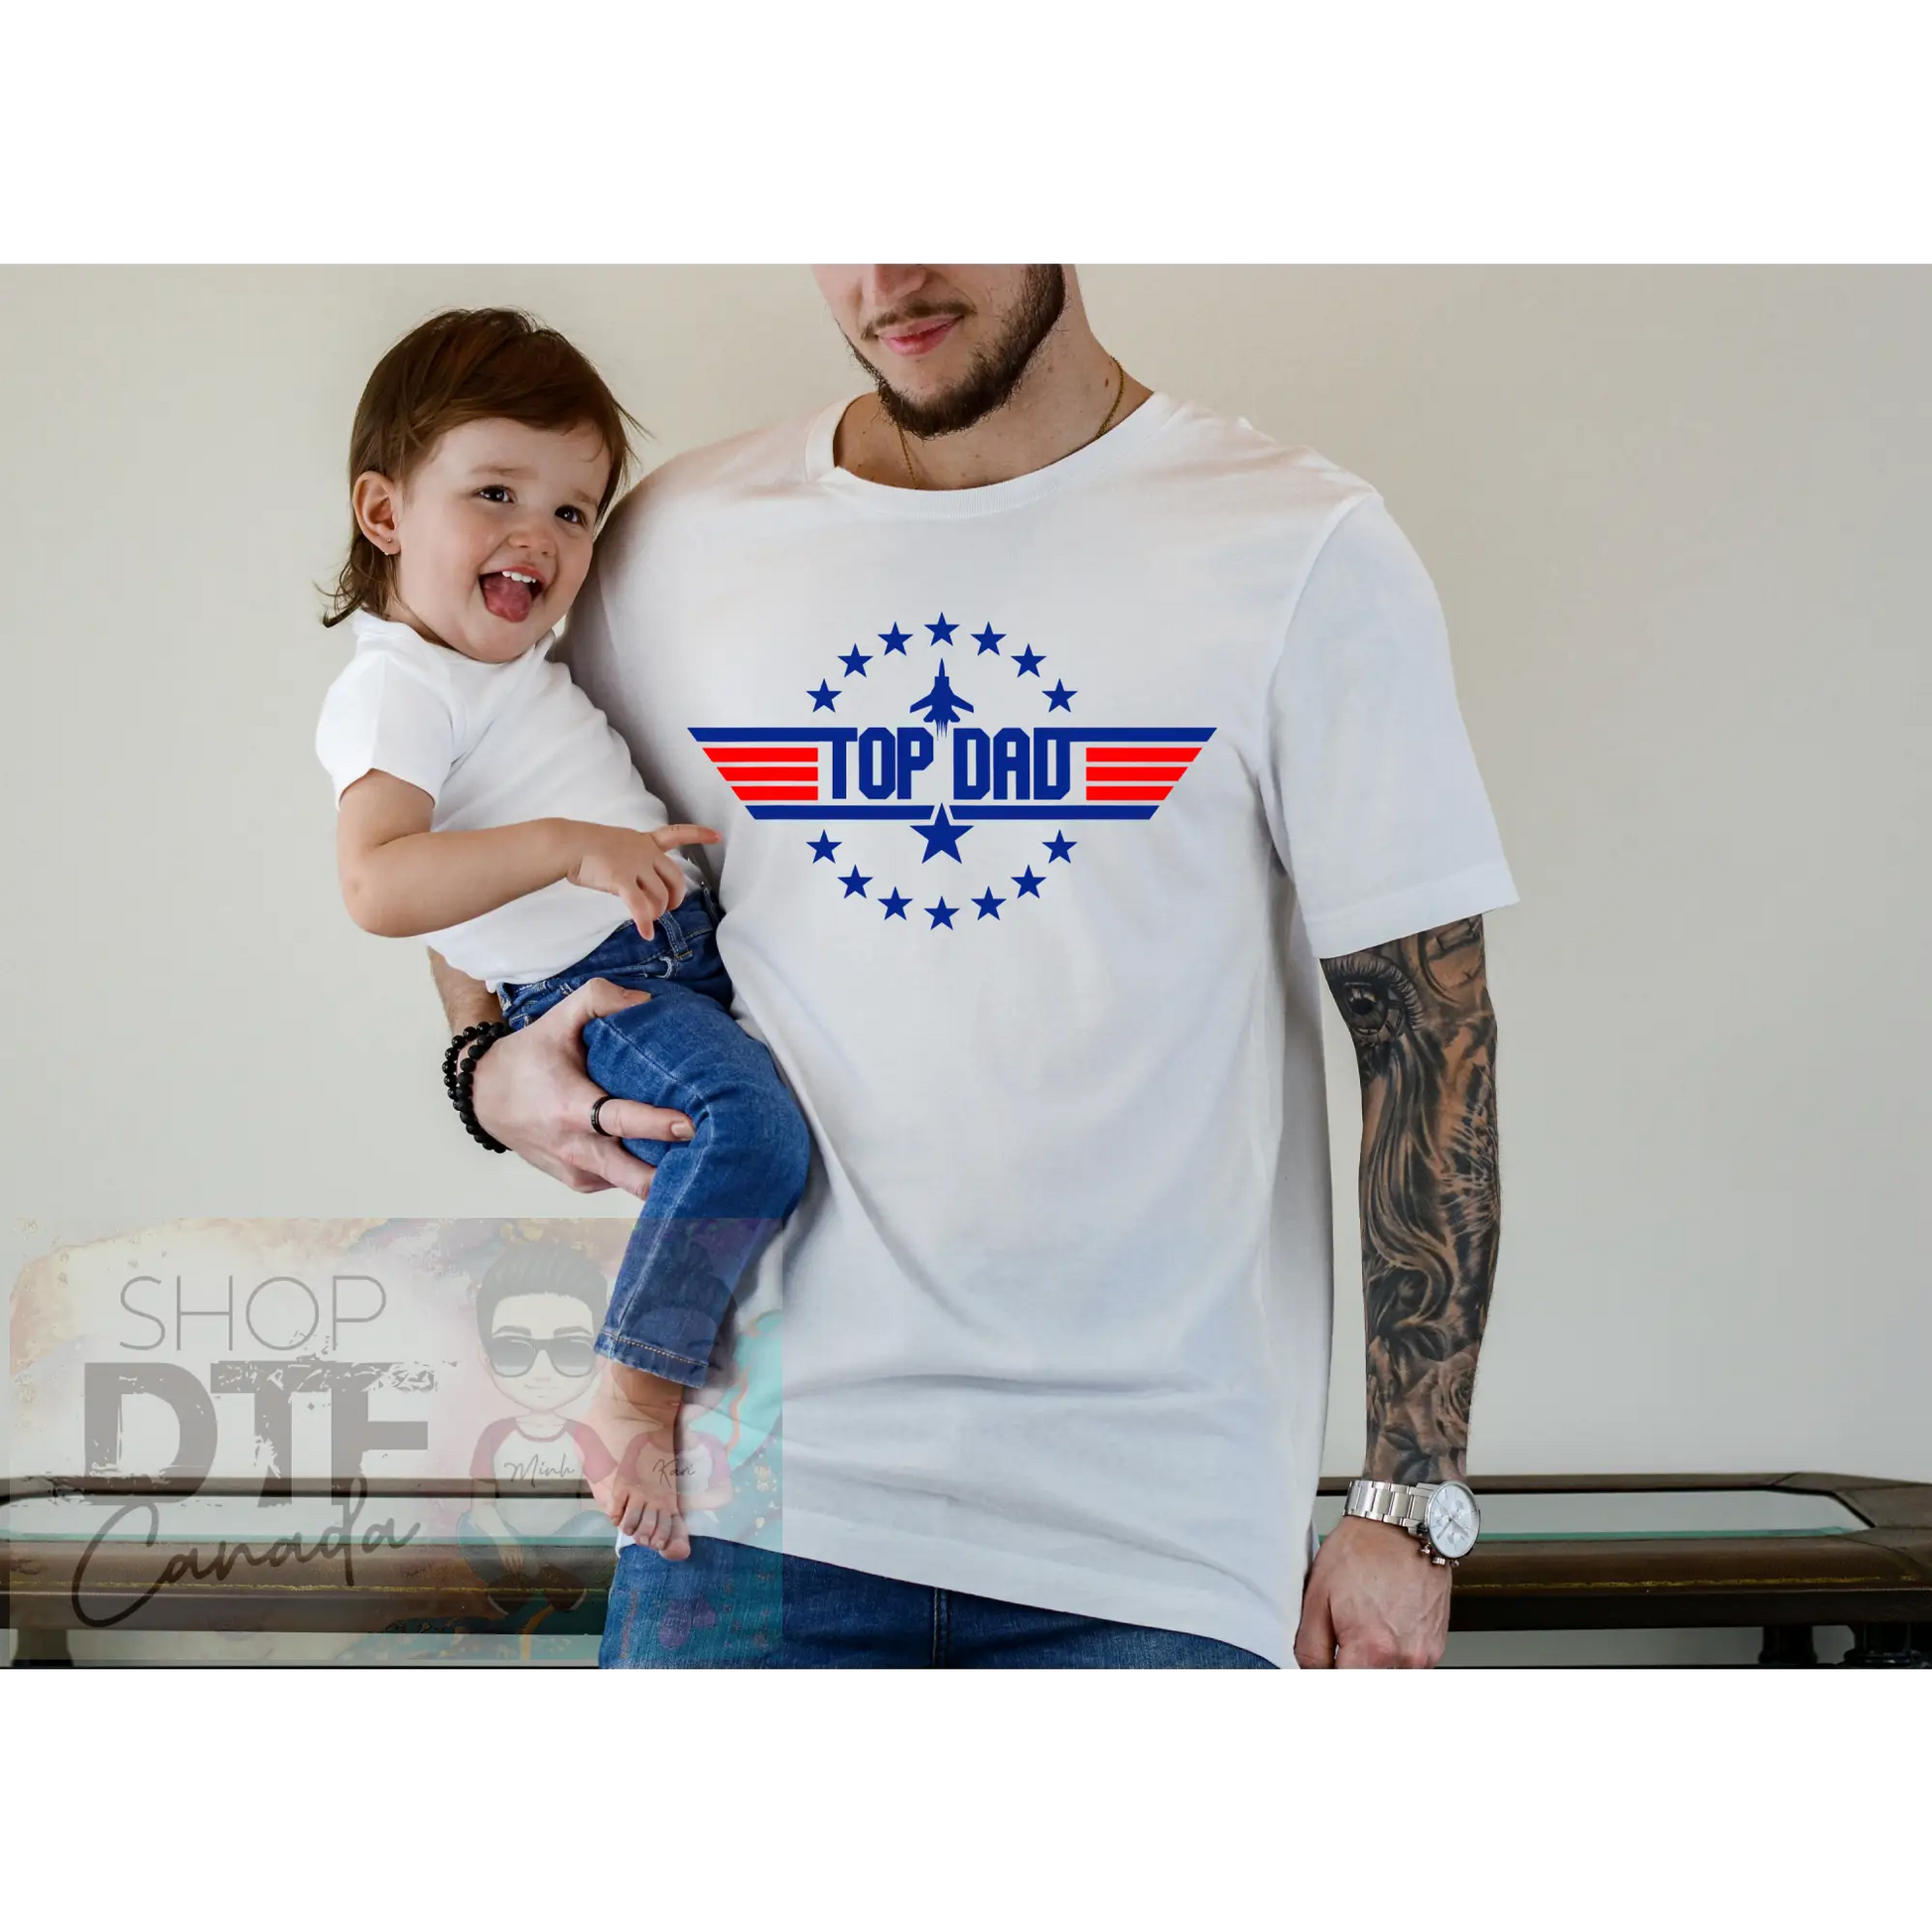 Dad - Top Dad - Shirts & Tops